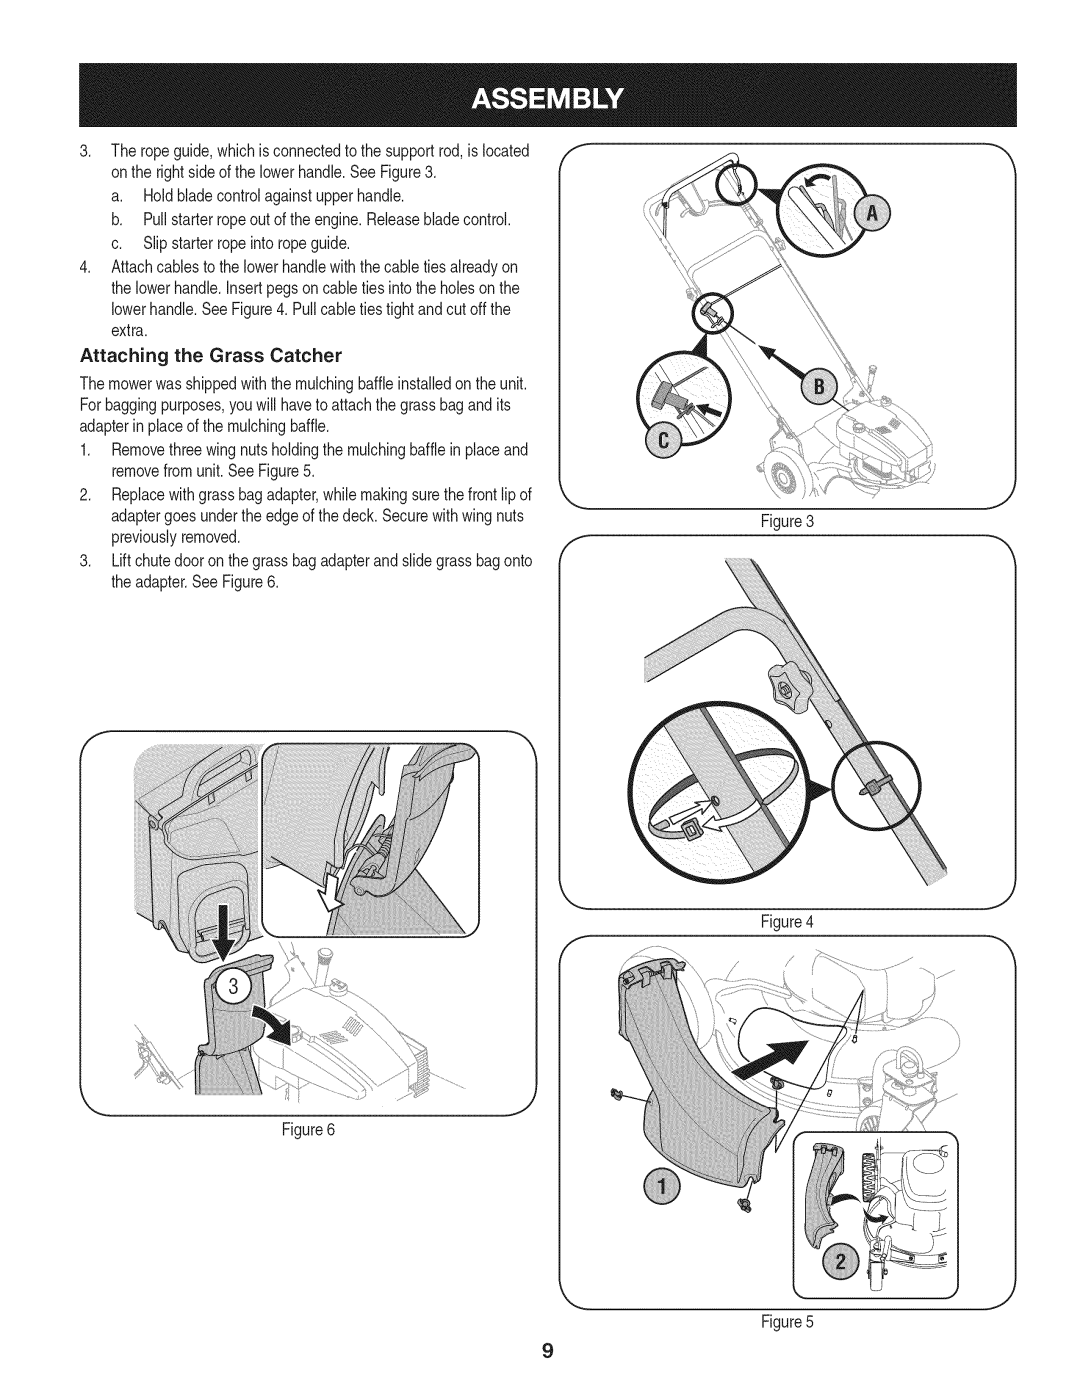 Craftsman 247.887210 manual a.Holdbladecontrolagainstupperhandle 